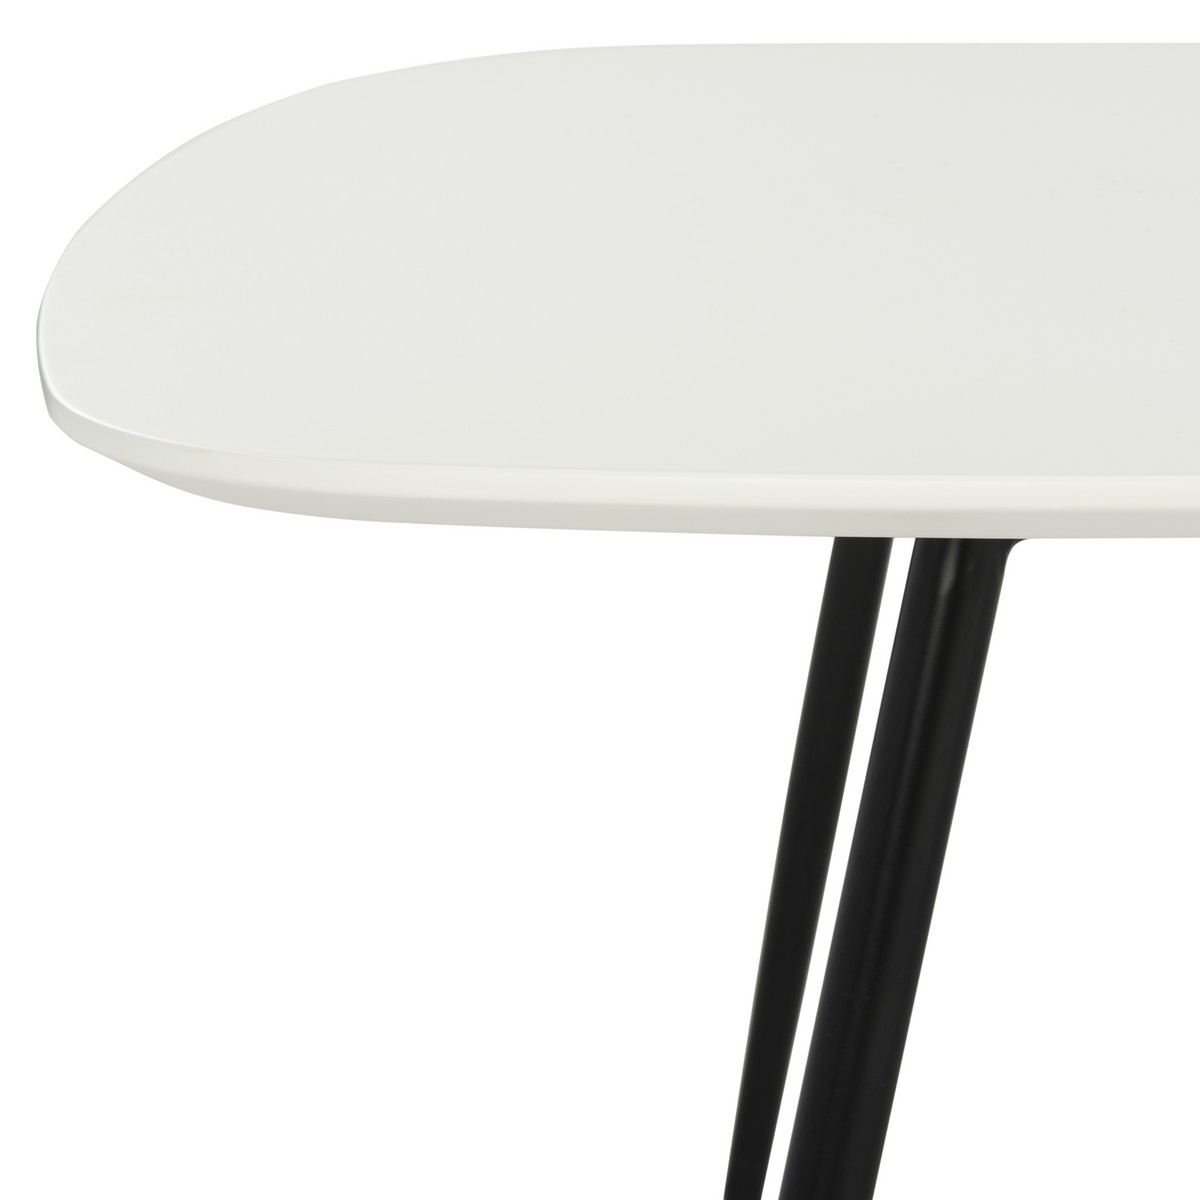 Jasmine Bi Level Coffee Table - White/Grey - Safavieh - Image 5